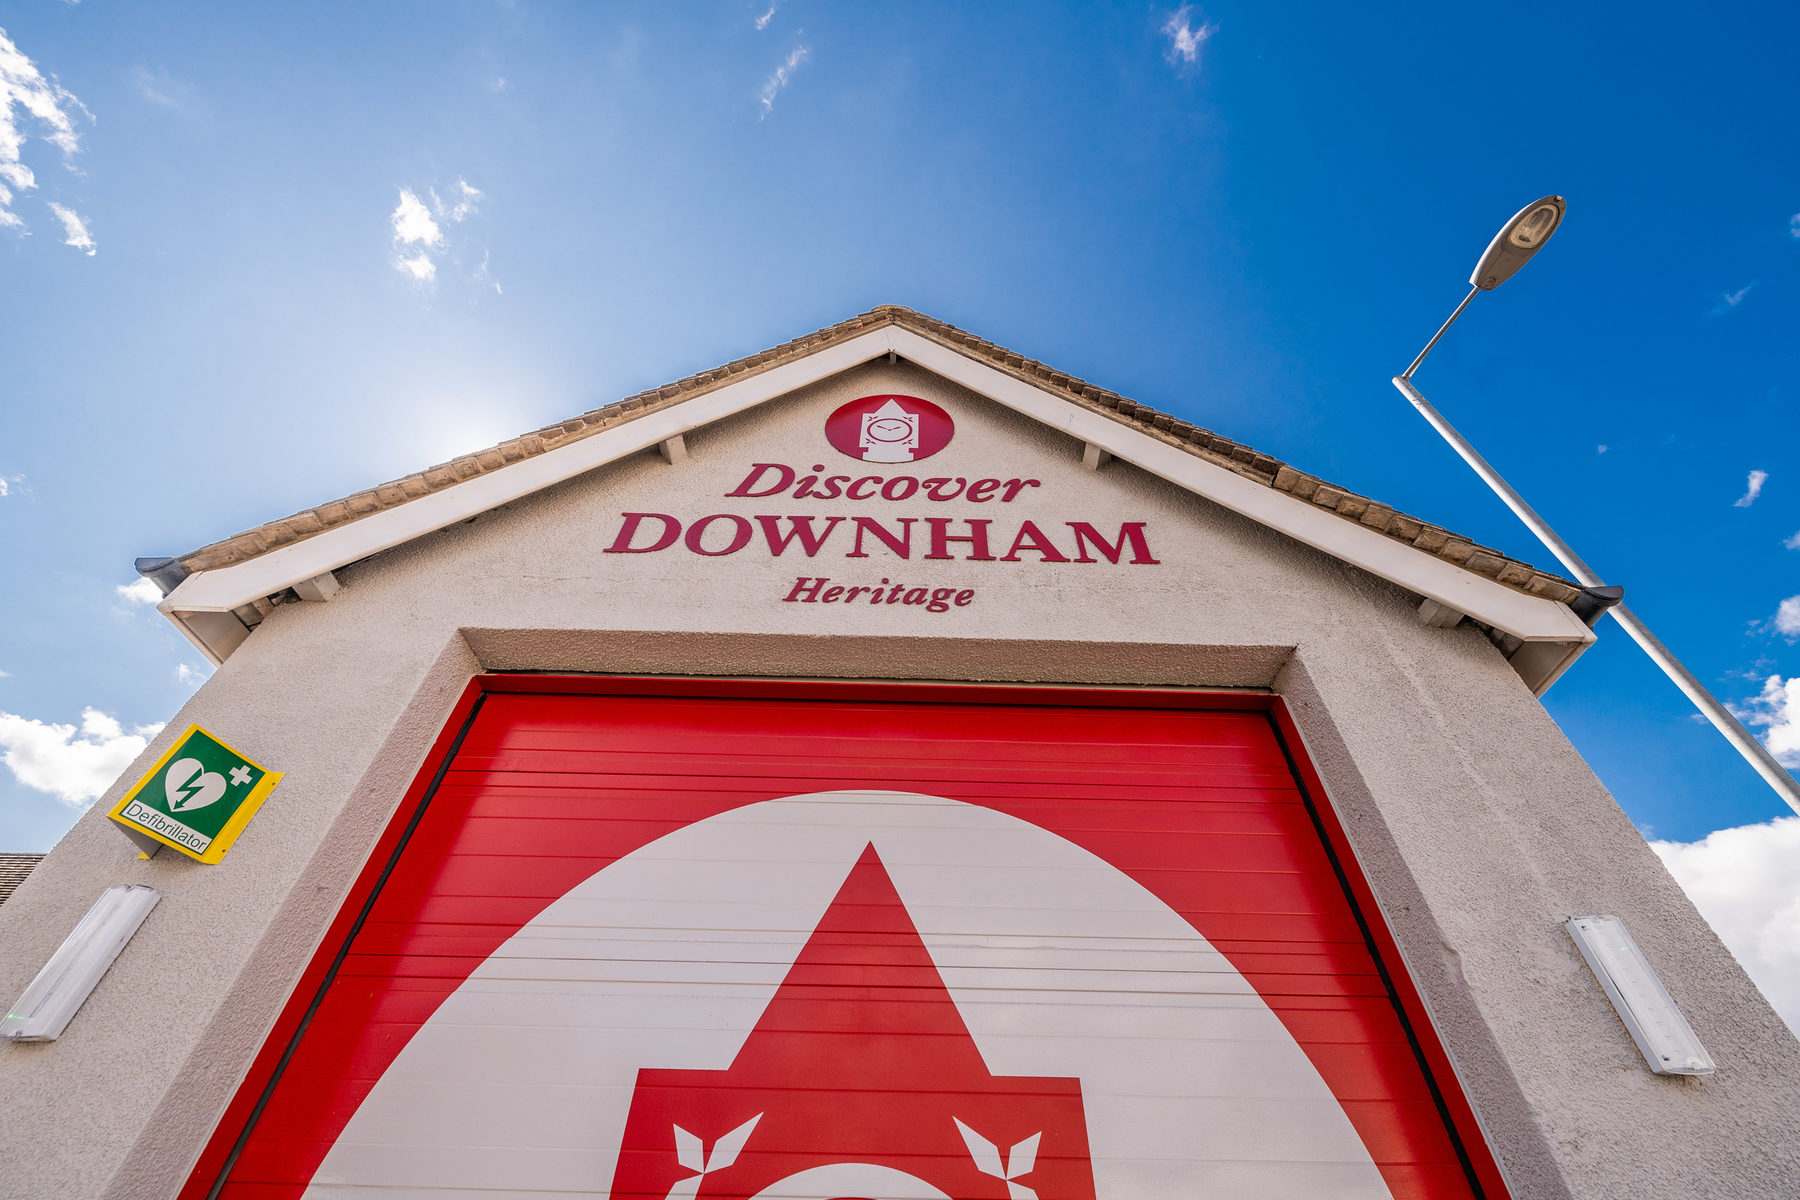 003 Downham Heritage 2018